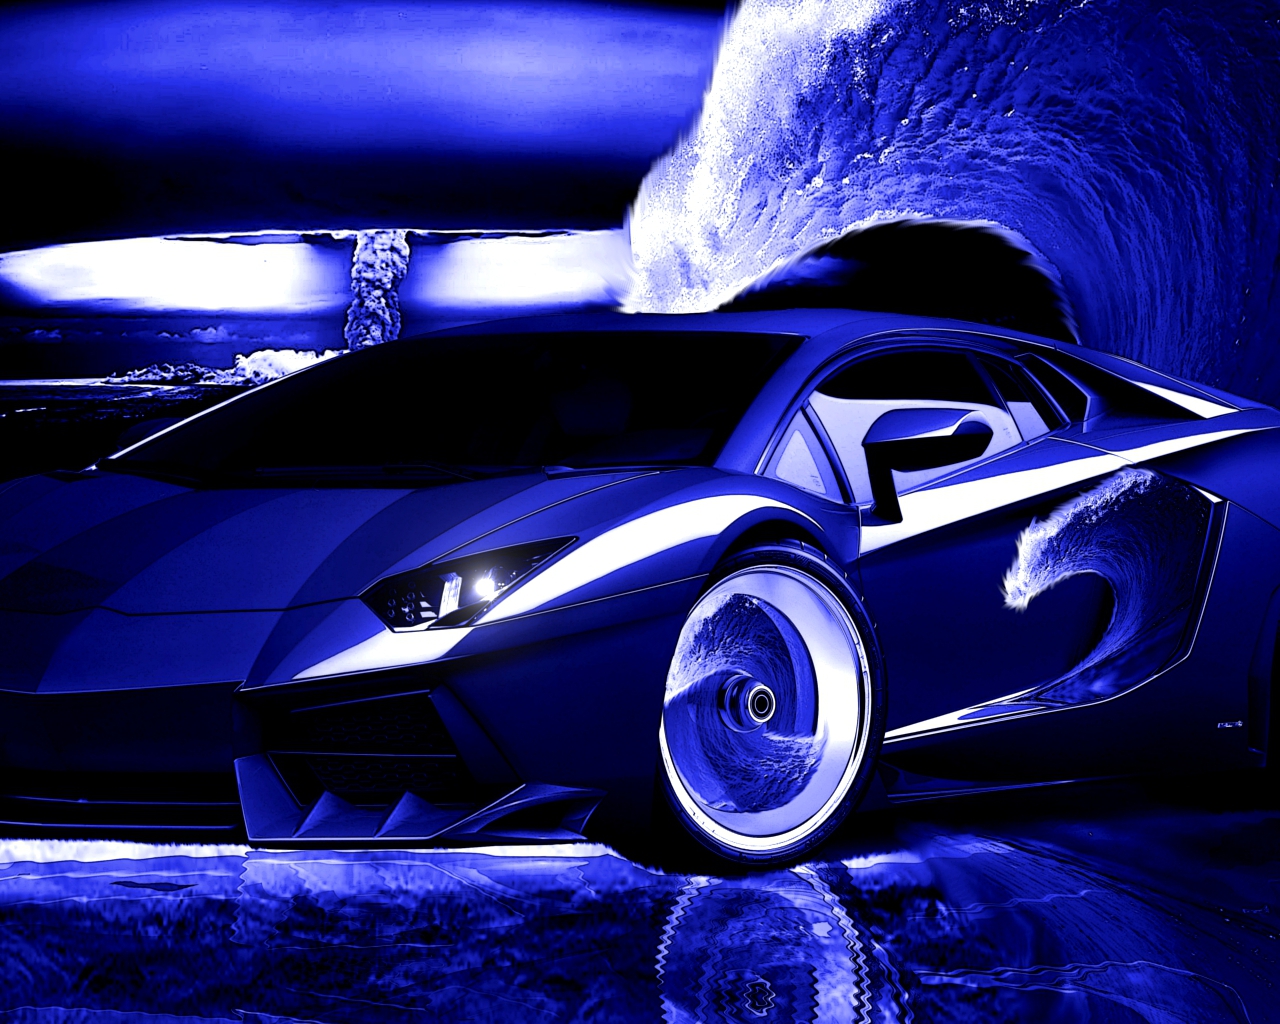 Free Download Free Download Pics Photos Cool Lamborghini Wallpaper I